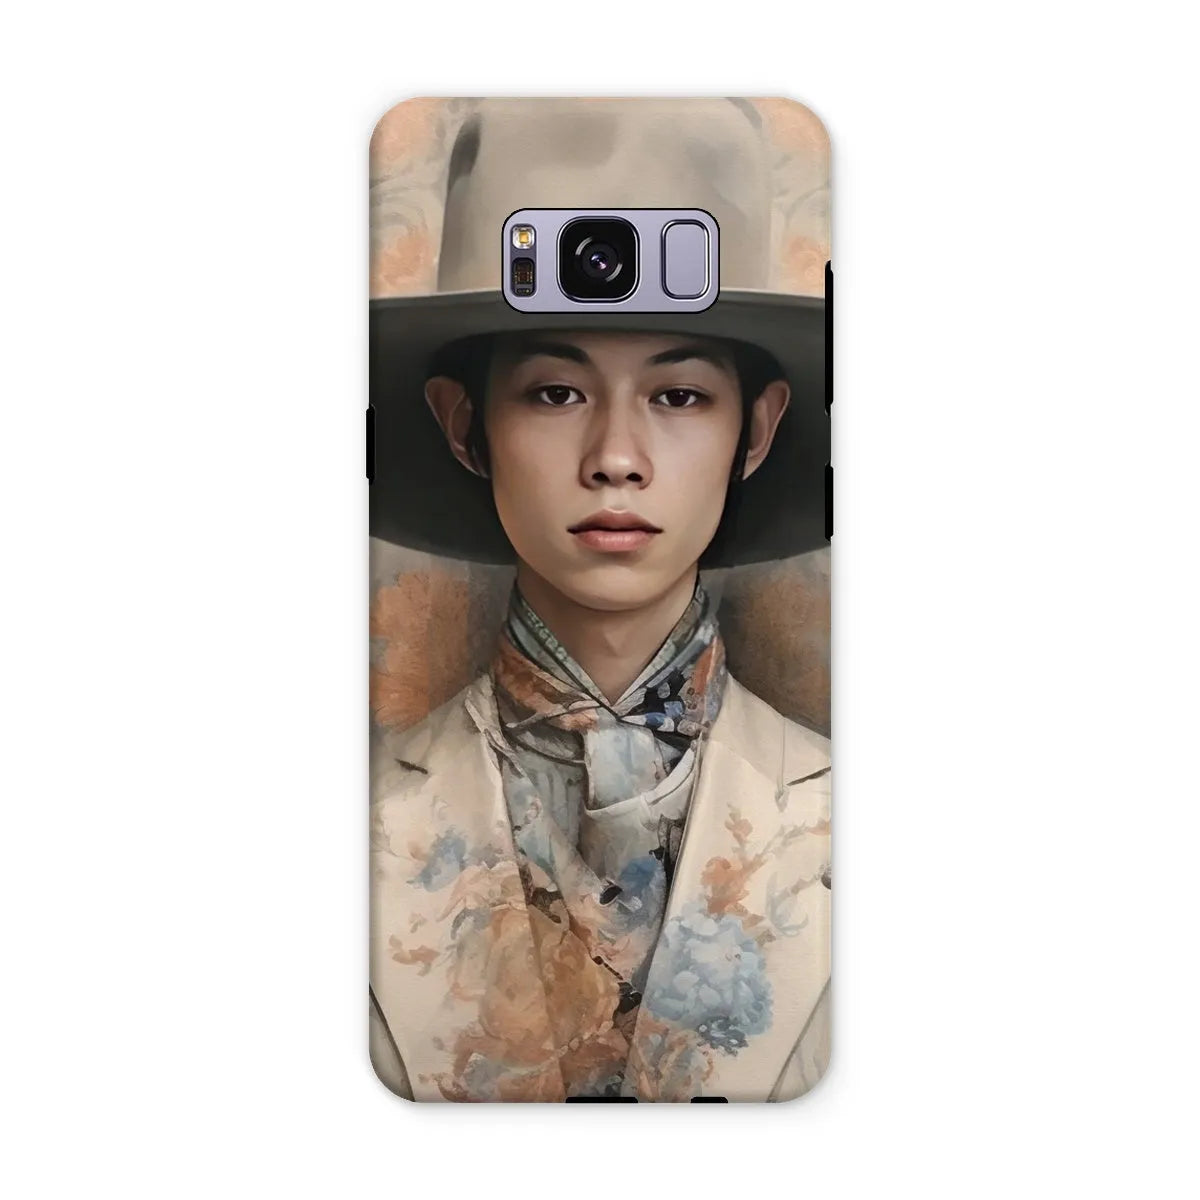 Thuanthong The Transgender Cowboy - Thai F2m Art Phone Case - Samsung Galaxy S8 Plus / Matte - Mobile Phone Cases